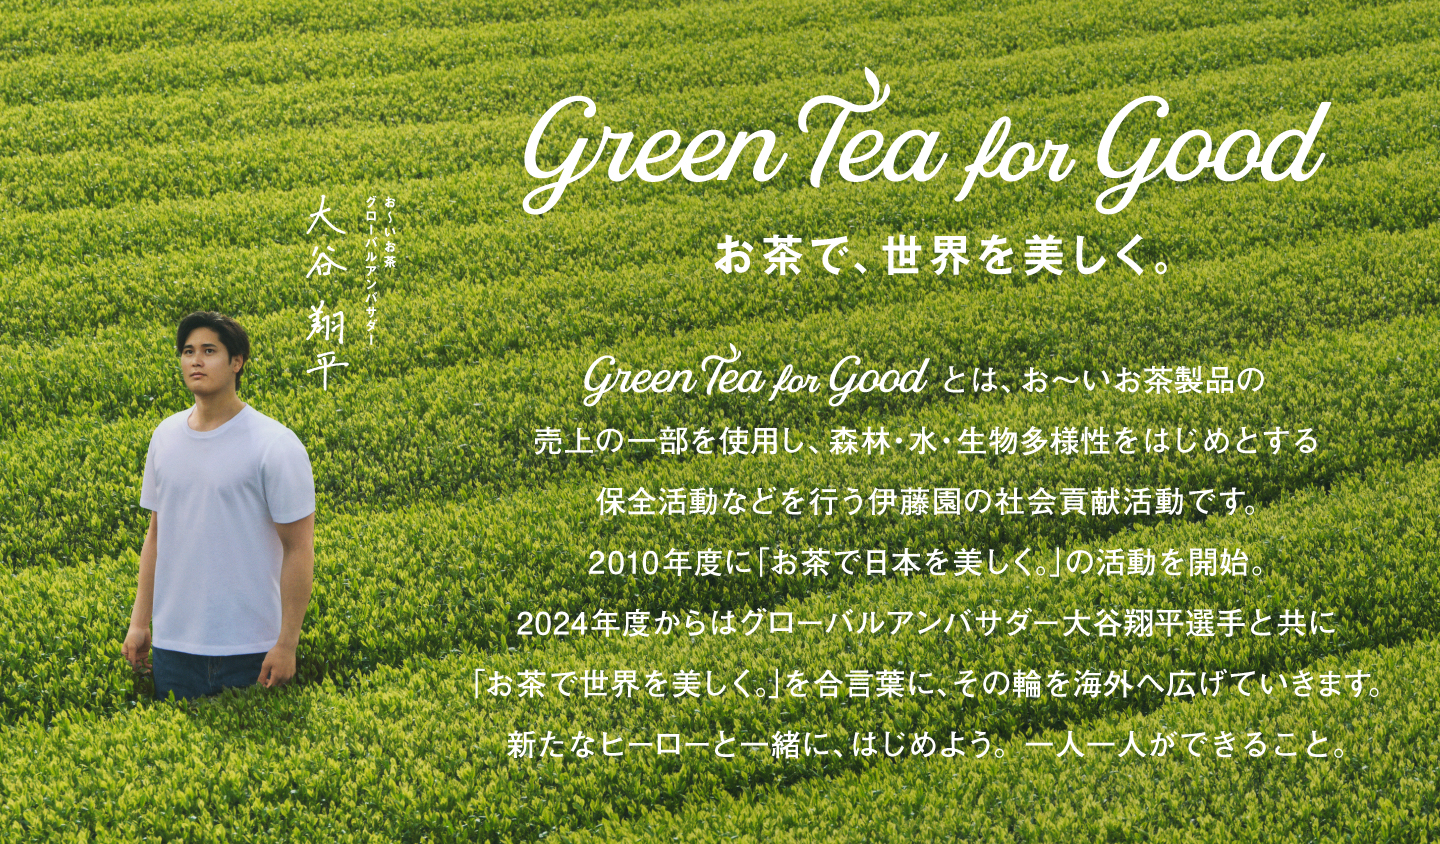 Green Tea for Good メッセージ